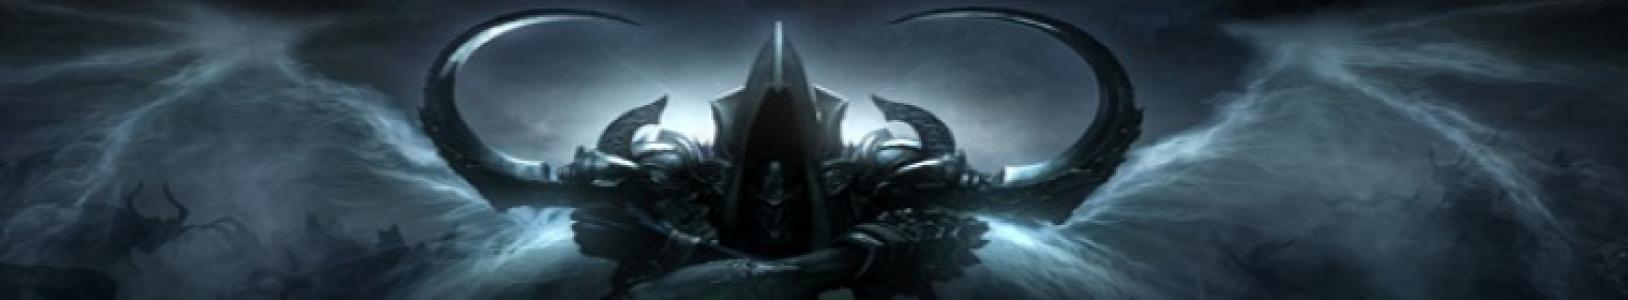 Diablo III: Reaper of Souls banner